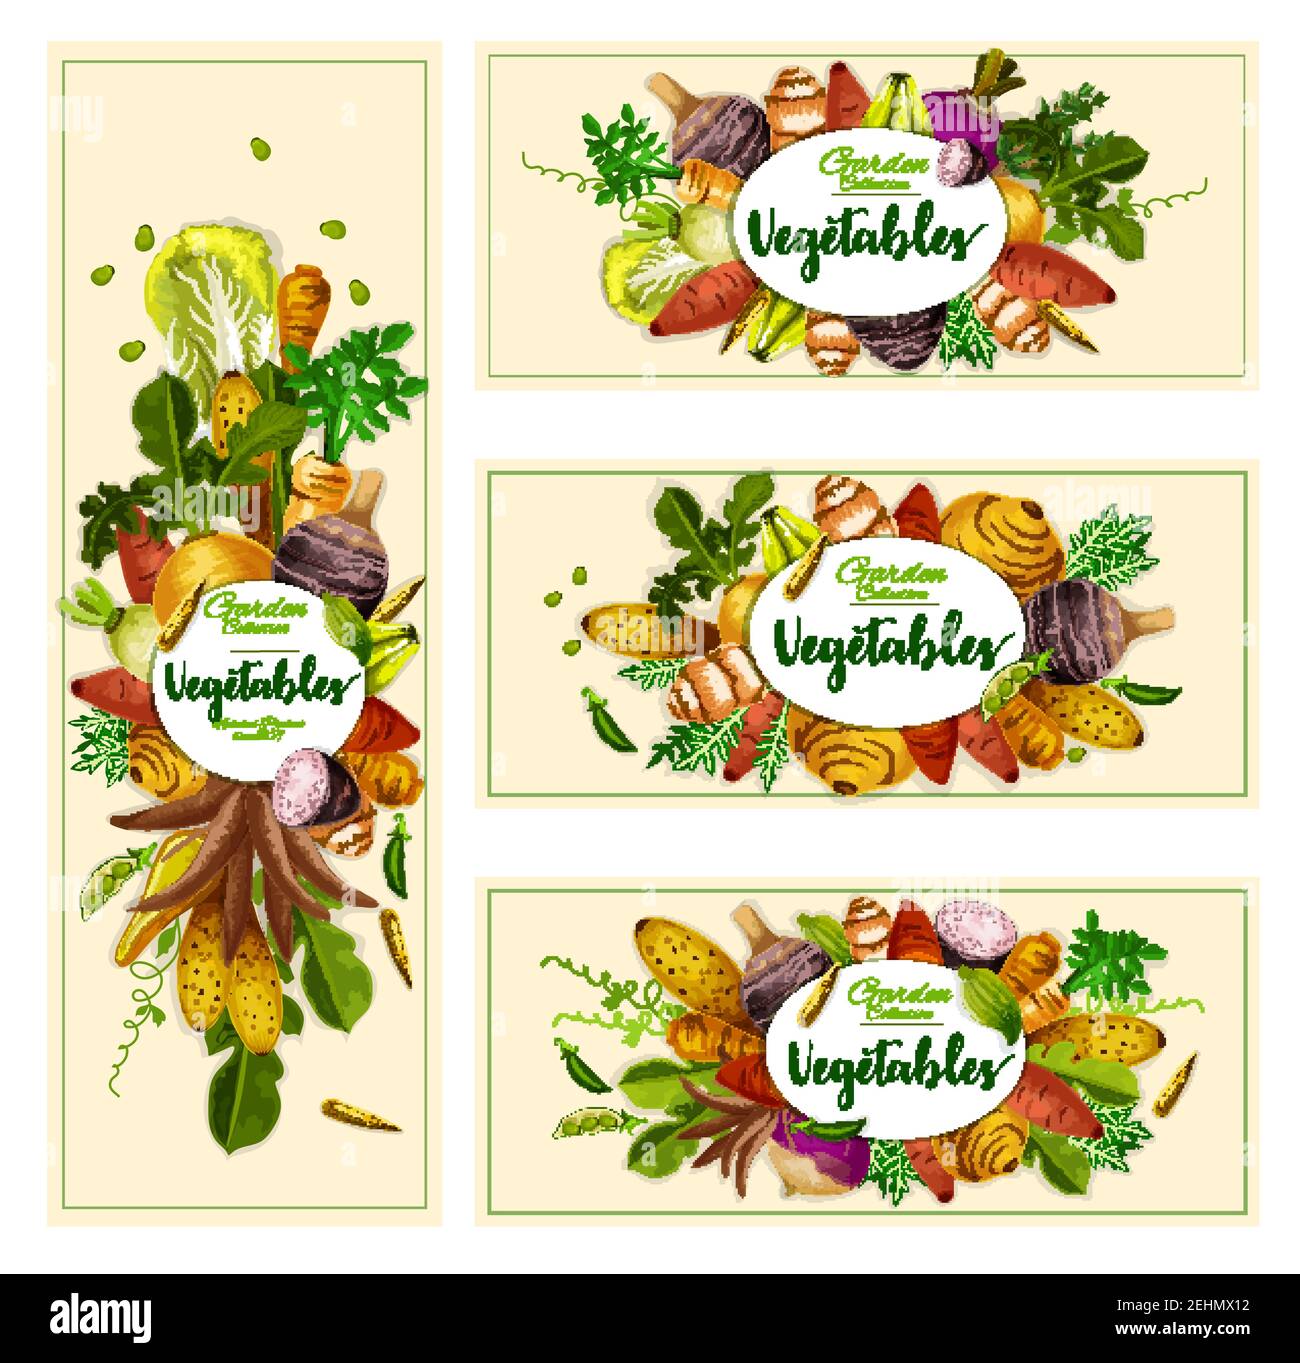 Vegetables and exotic farm veggies banners. Vector natural vegan organic potato, radish or turnip and legume bread beans, artichoke with jicama, yam a Stock Vector